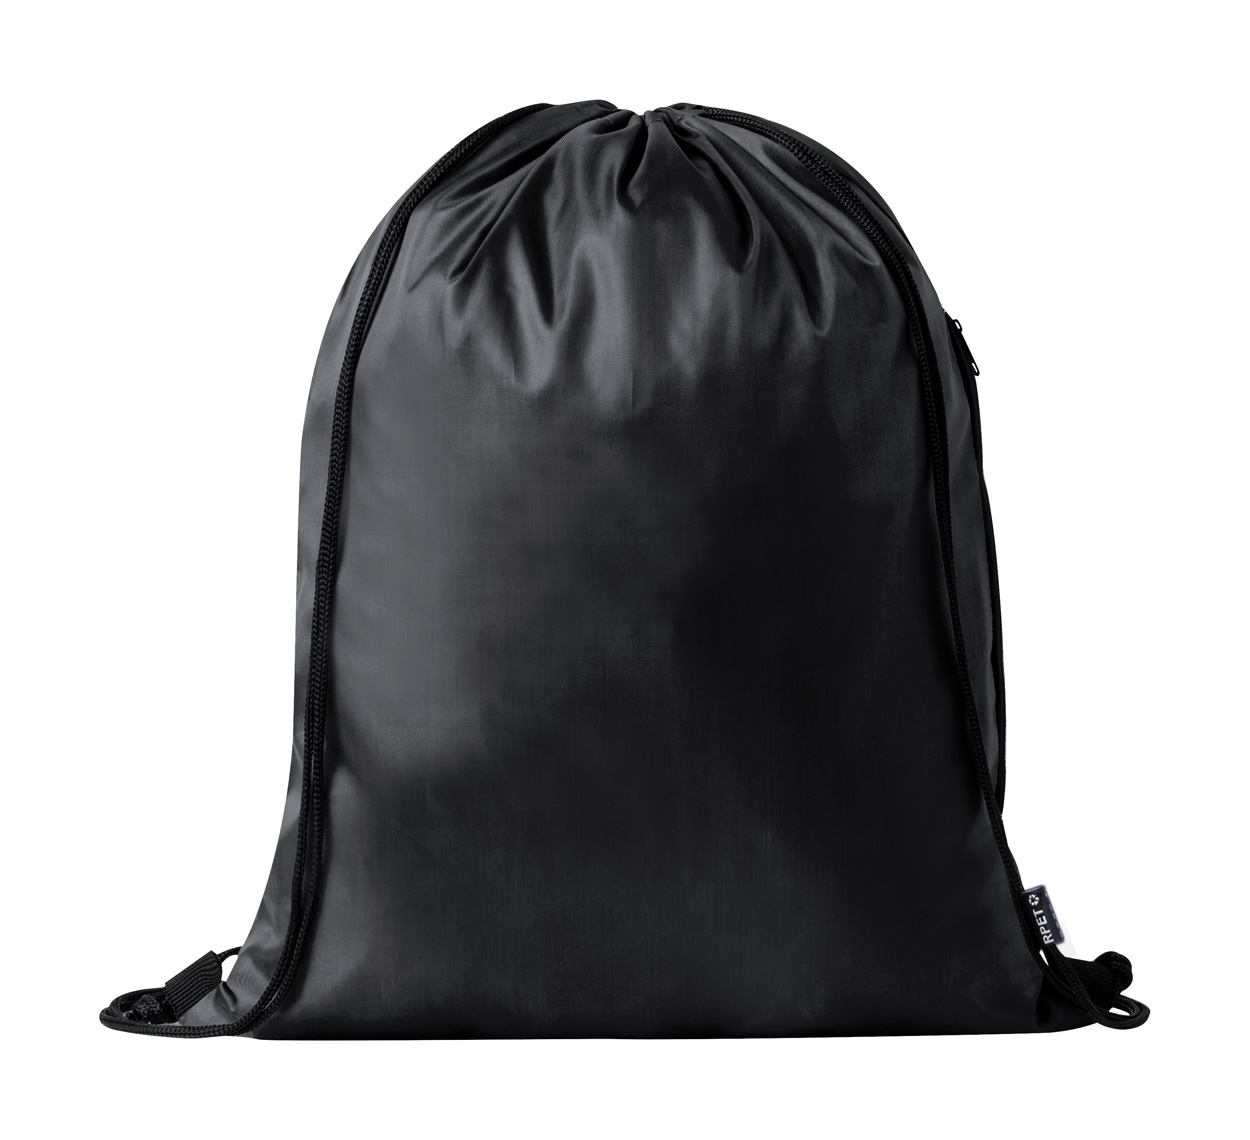 Hildan RPET drawstring bag - black